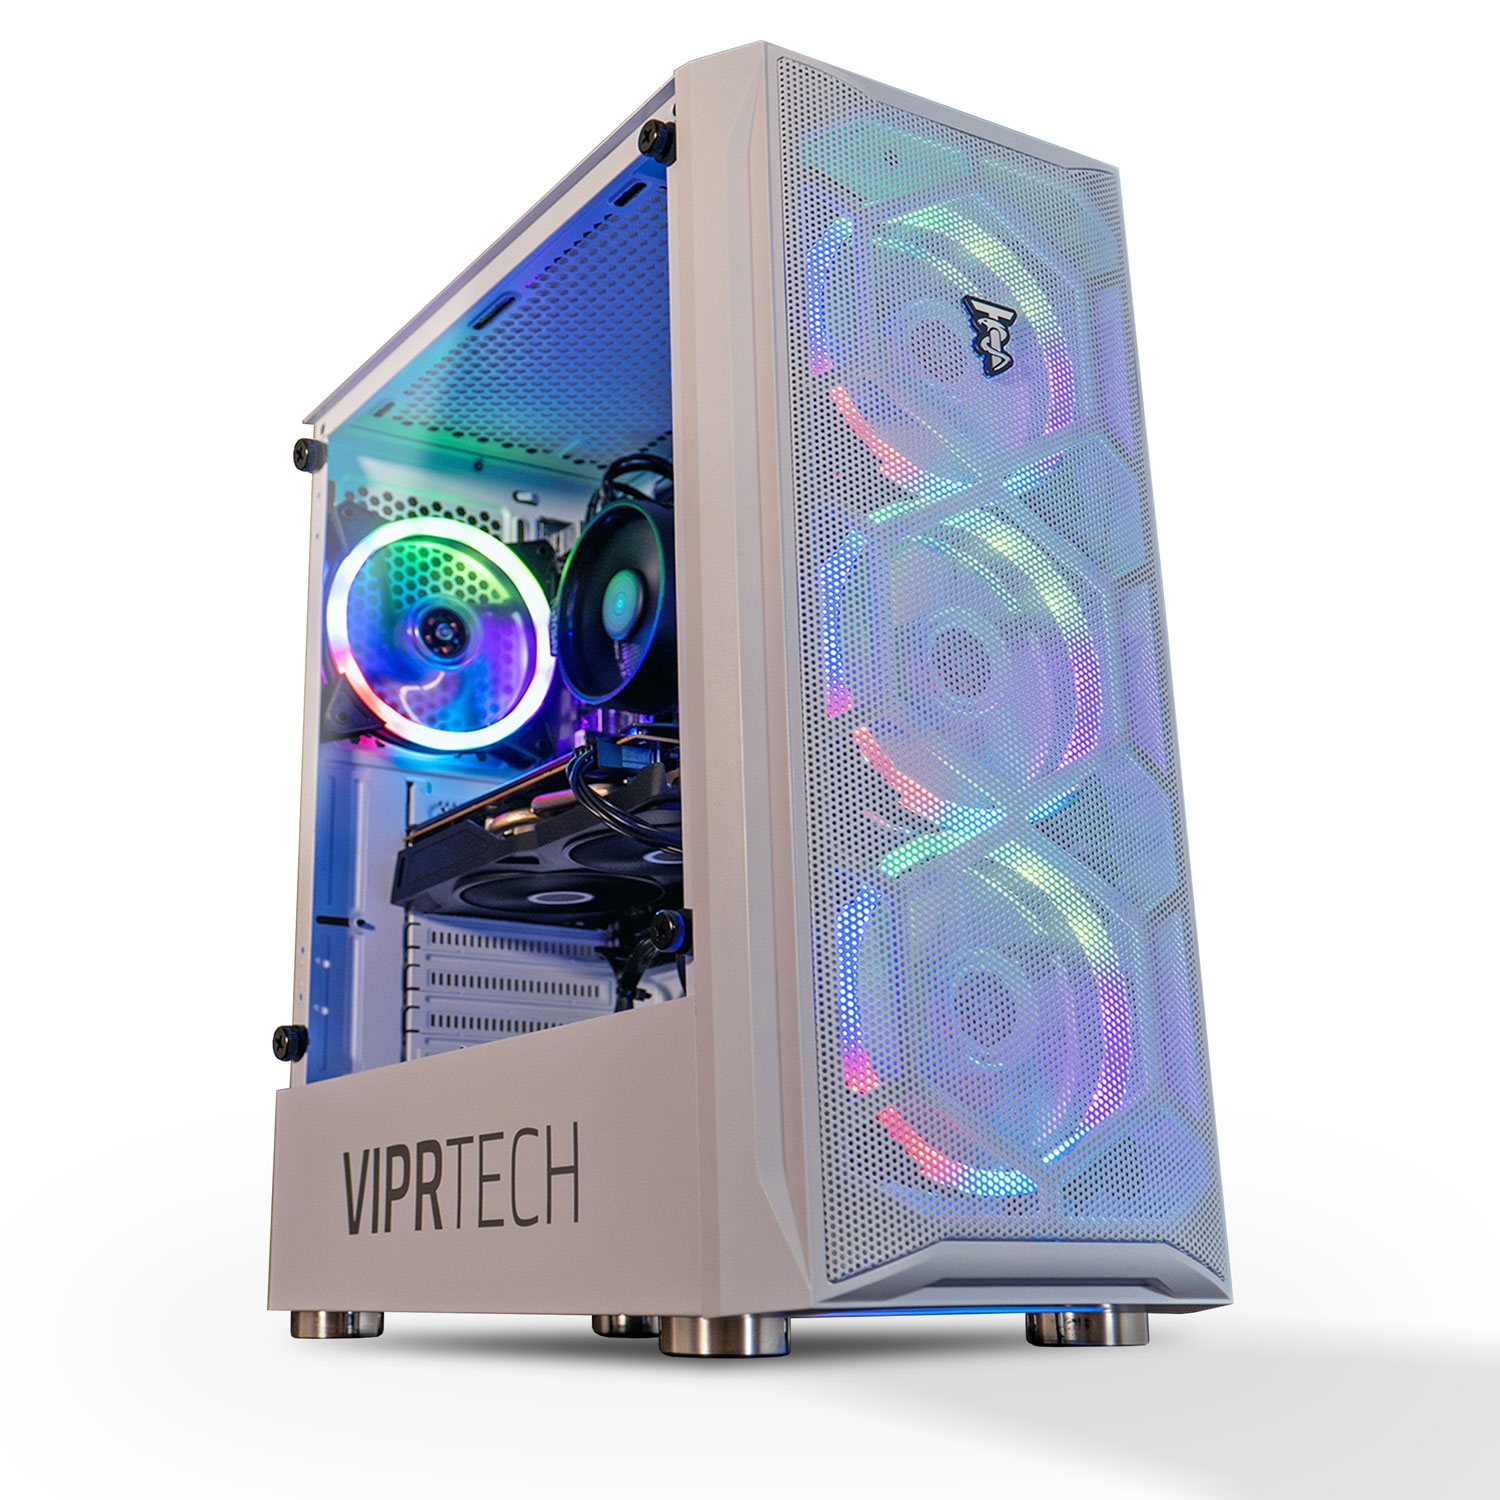 ViprTech Avalanche Gaming PC Computer Desktop - AMD Ryzen 5 (12-LCore), AMD Radeon RX 580 8GB, 16GB DDR4 RAM, 1TB HDD, 700w PSU, VR-Ready, RGB, WiFi, Win 10 Pro, Warranty, White